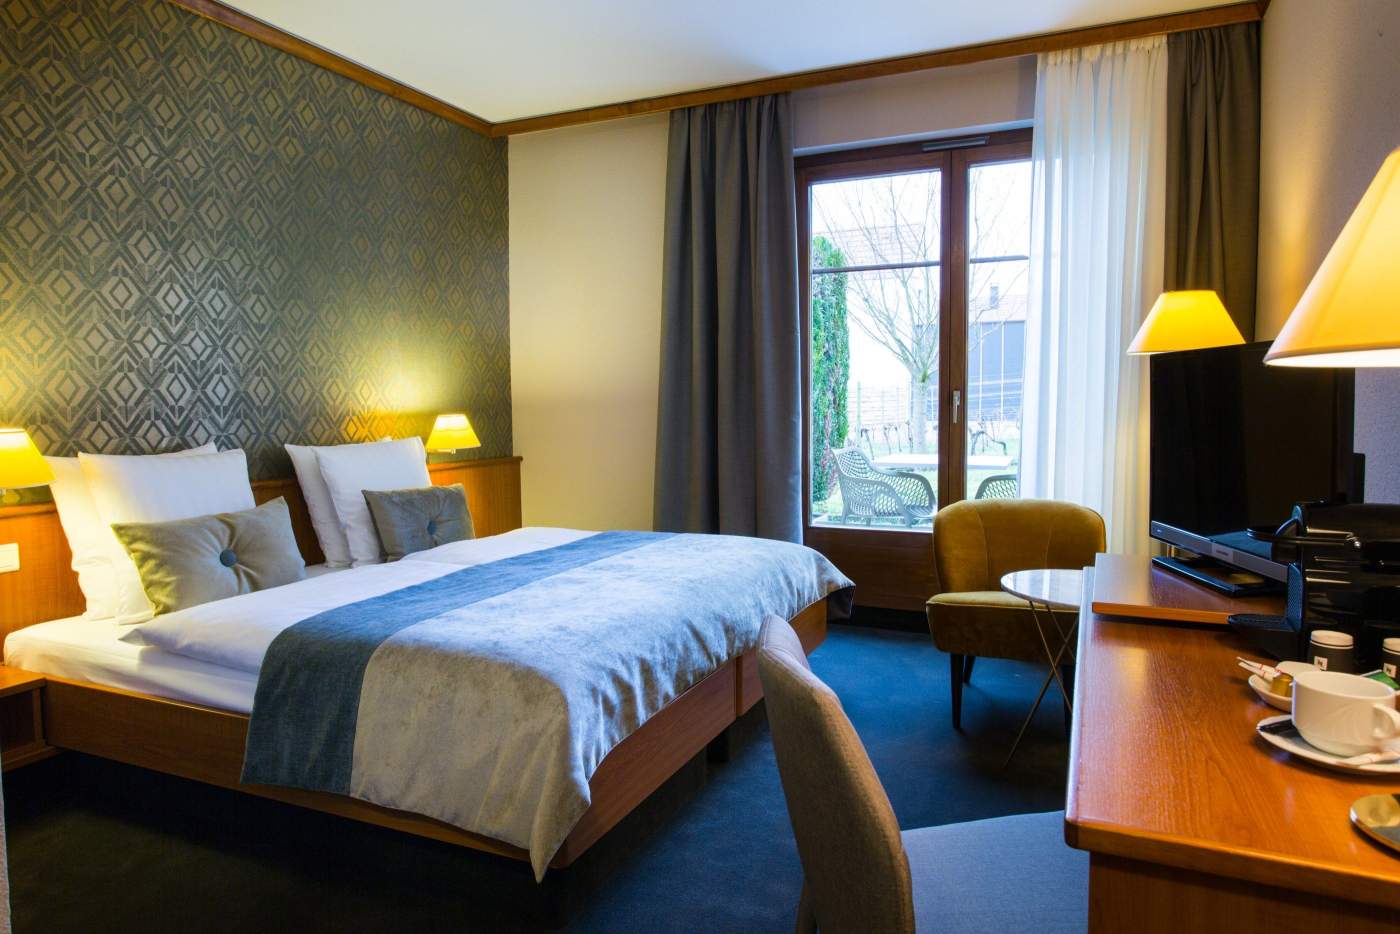  room James Vignoble Hotel Eguisheim Alsace Wine Road